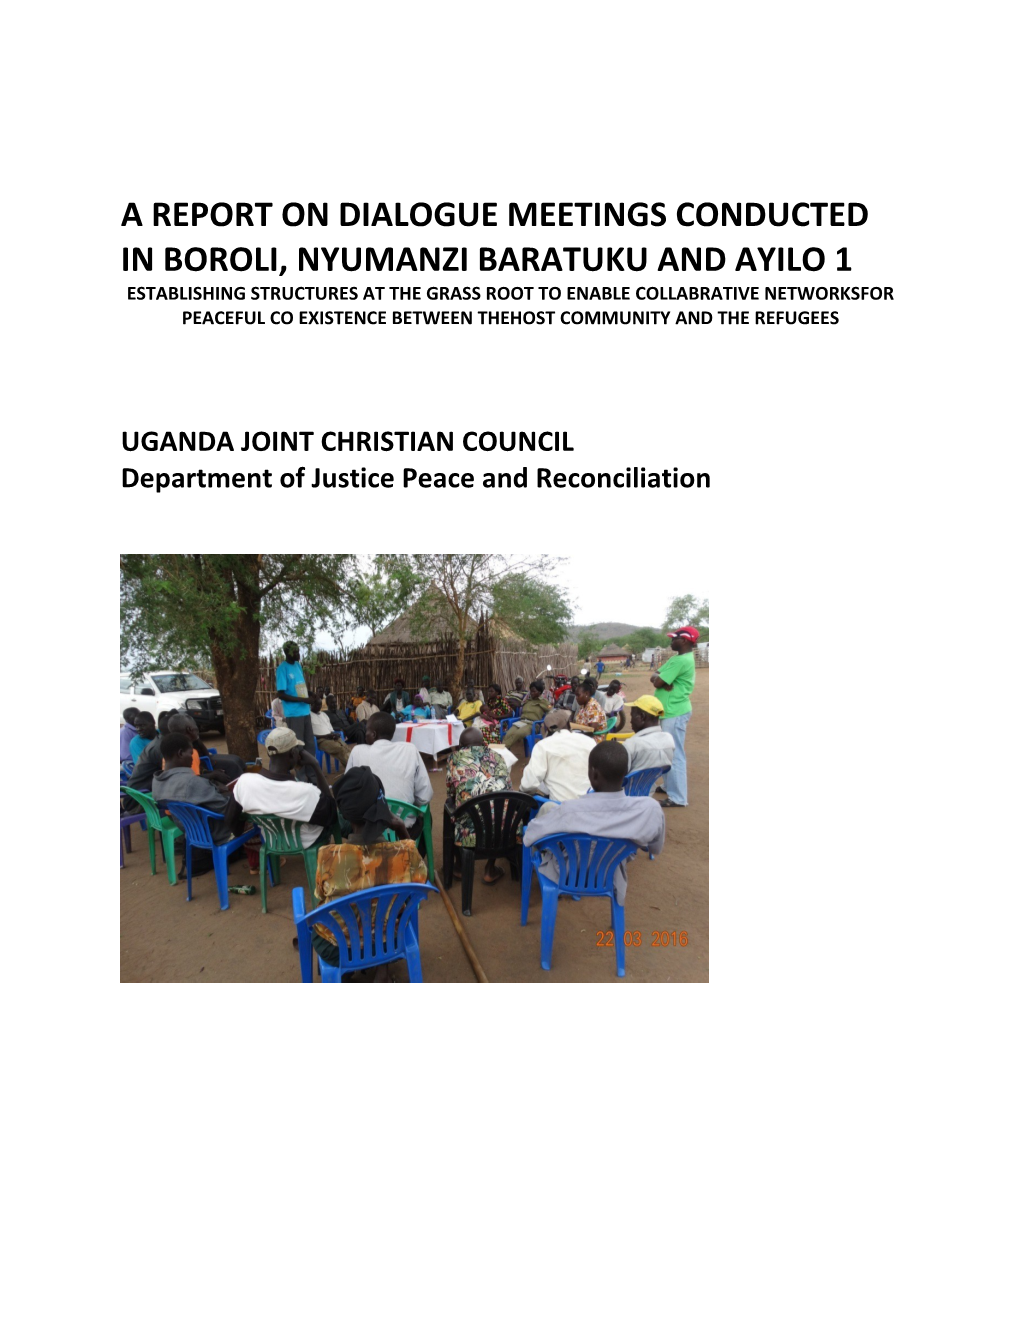 A Report on Dialogue Meetings Conducted in Boroli, Nyumanzi Baratuku and Ayilo 1